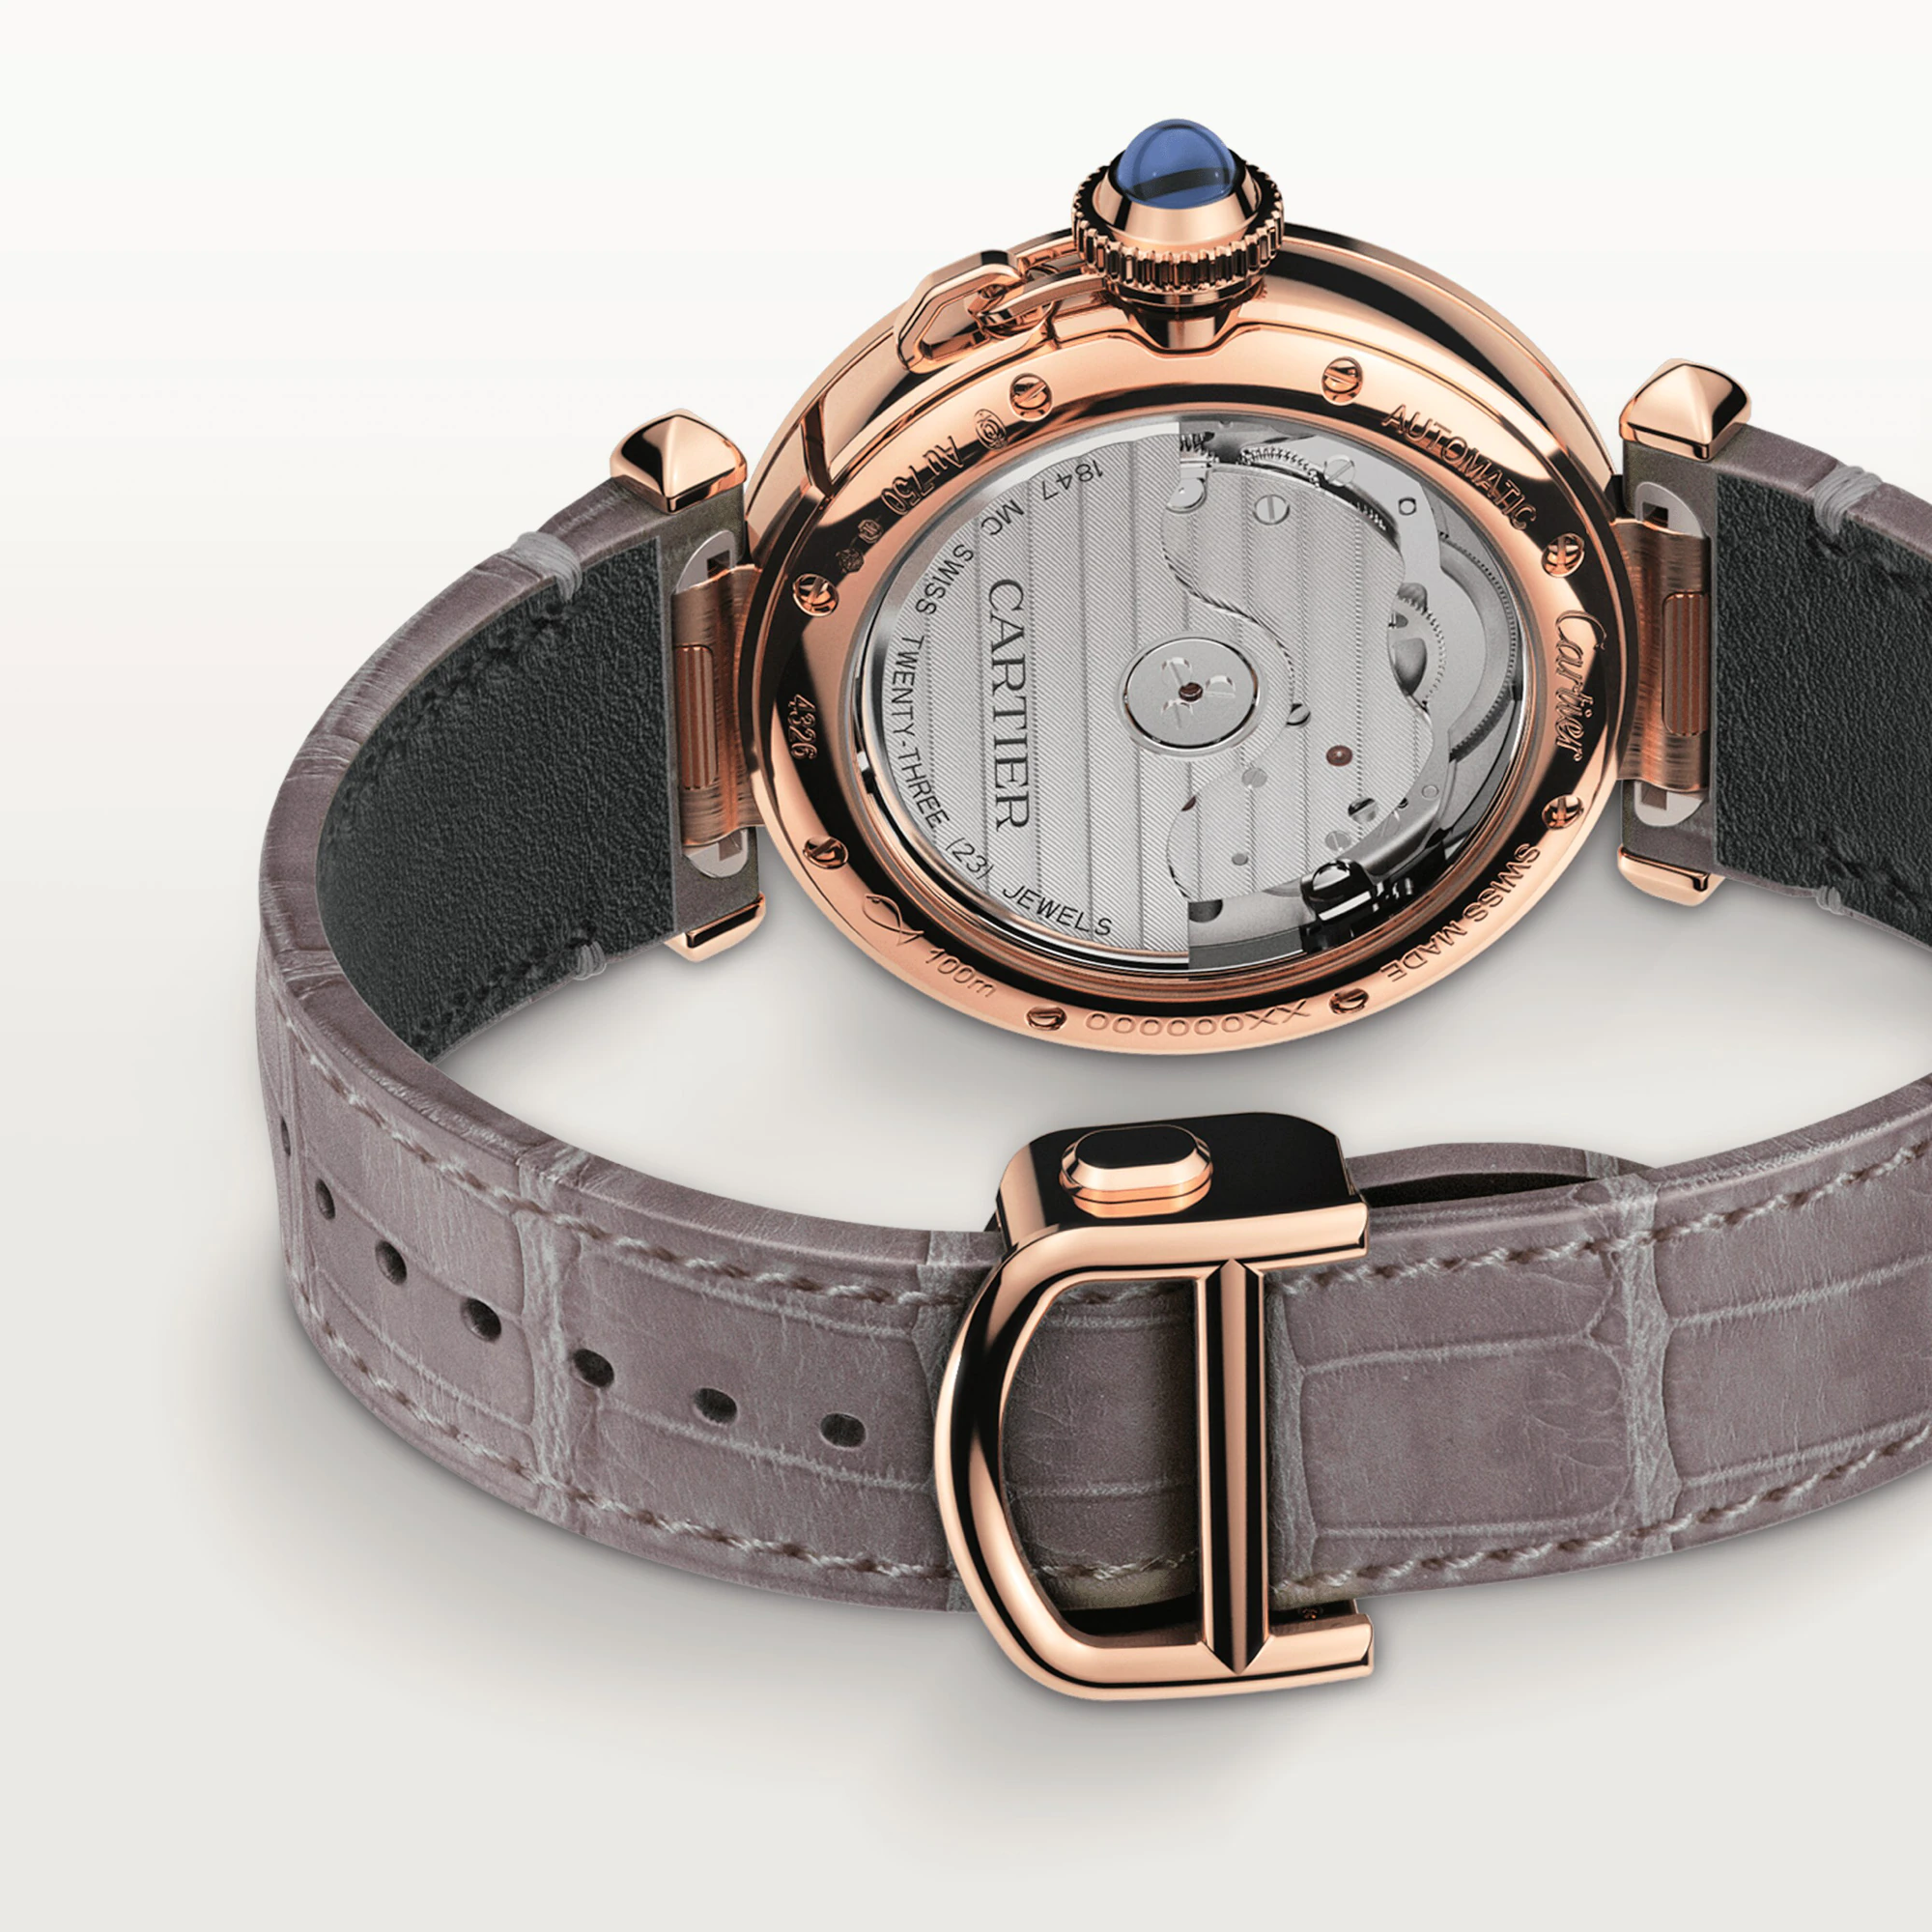 Cartier Pasha 35 mm Rose Gold Unisex Watch